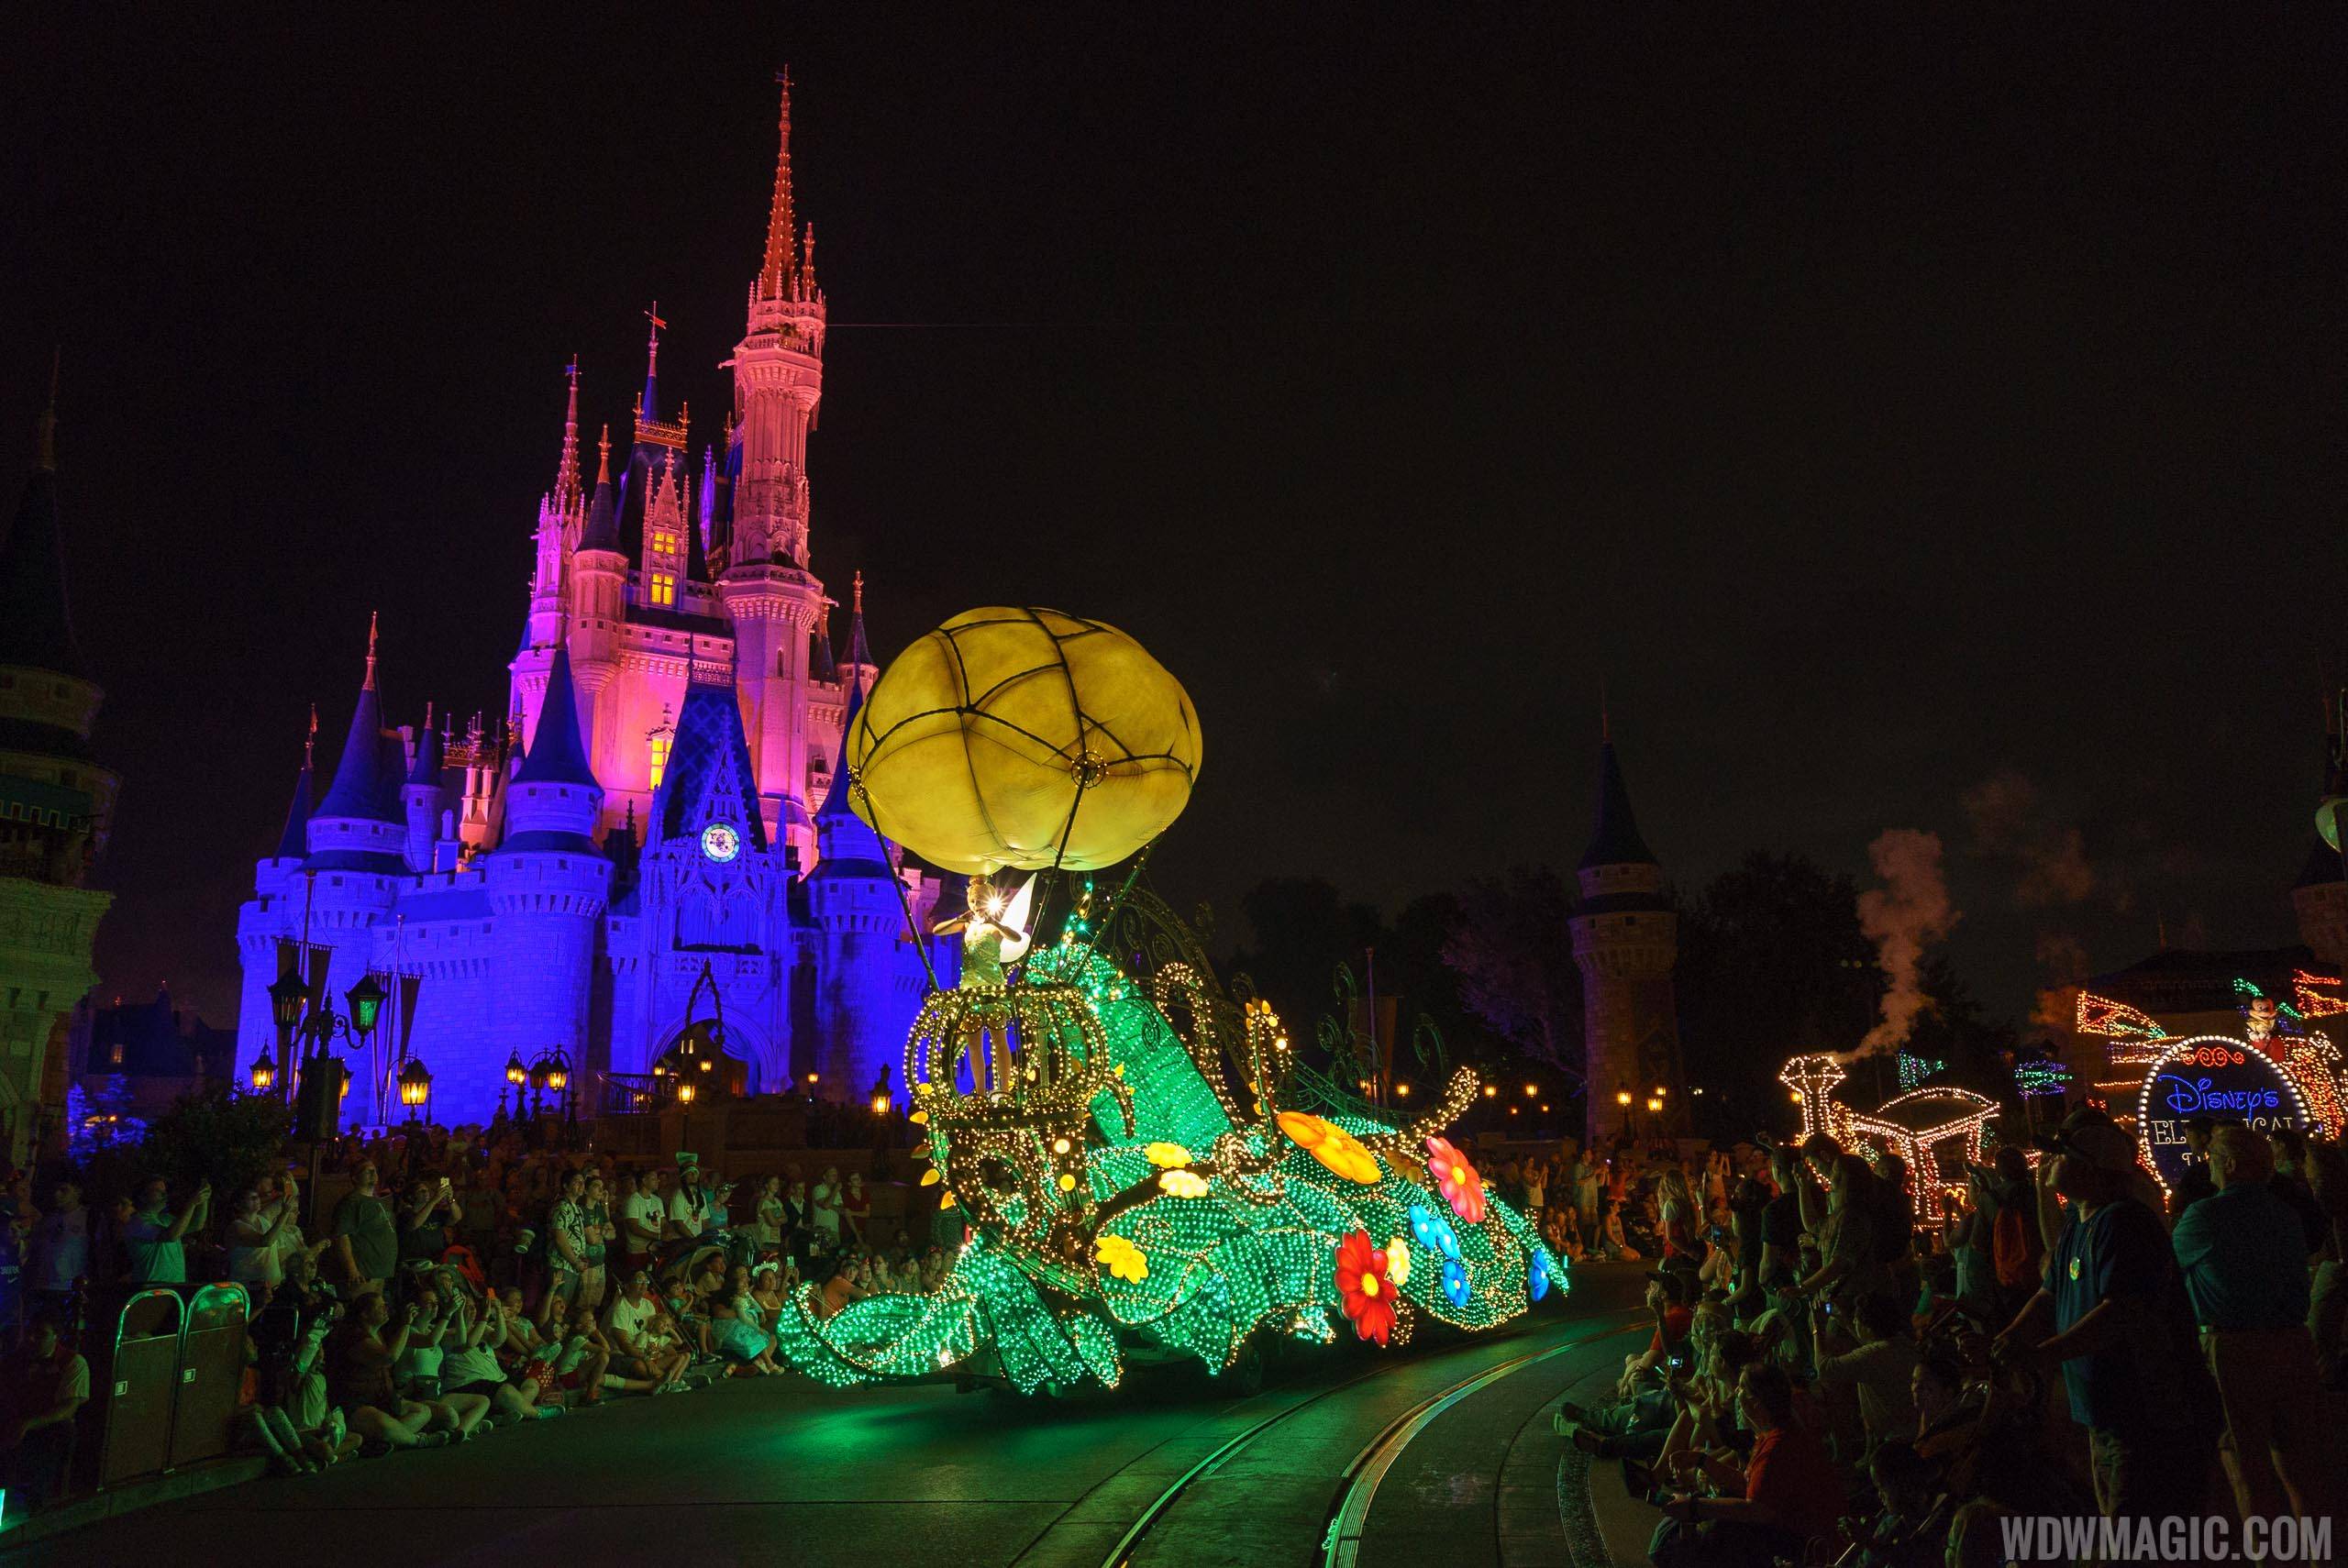 Press Release - The original Main Street Electrical Parade from Disneyland heading to Walt Disney World